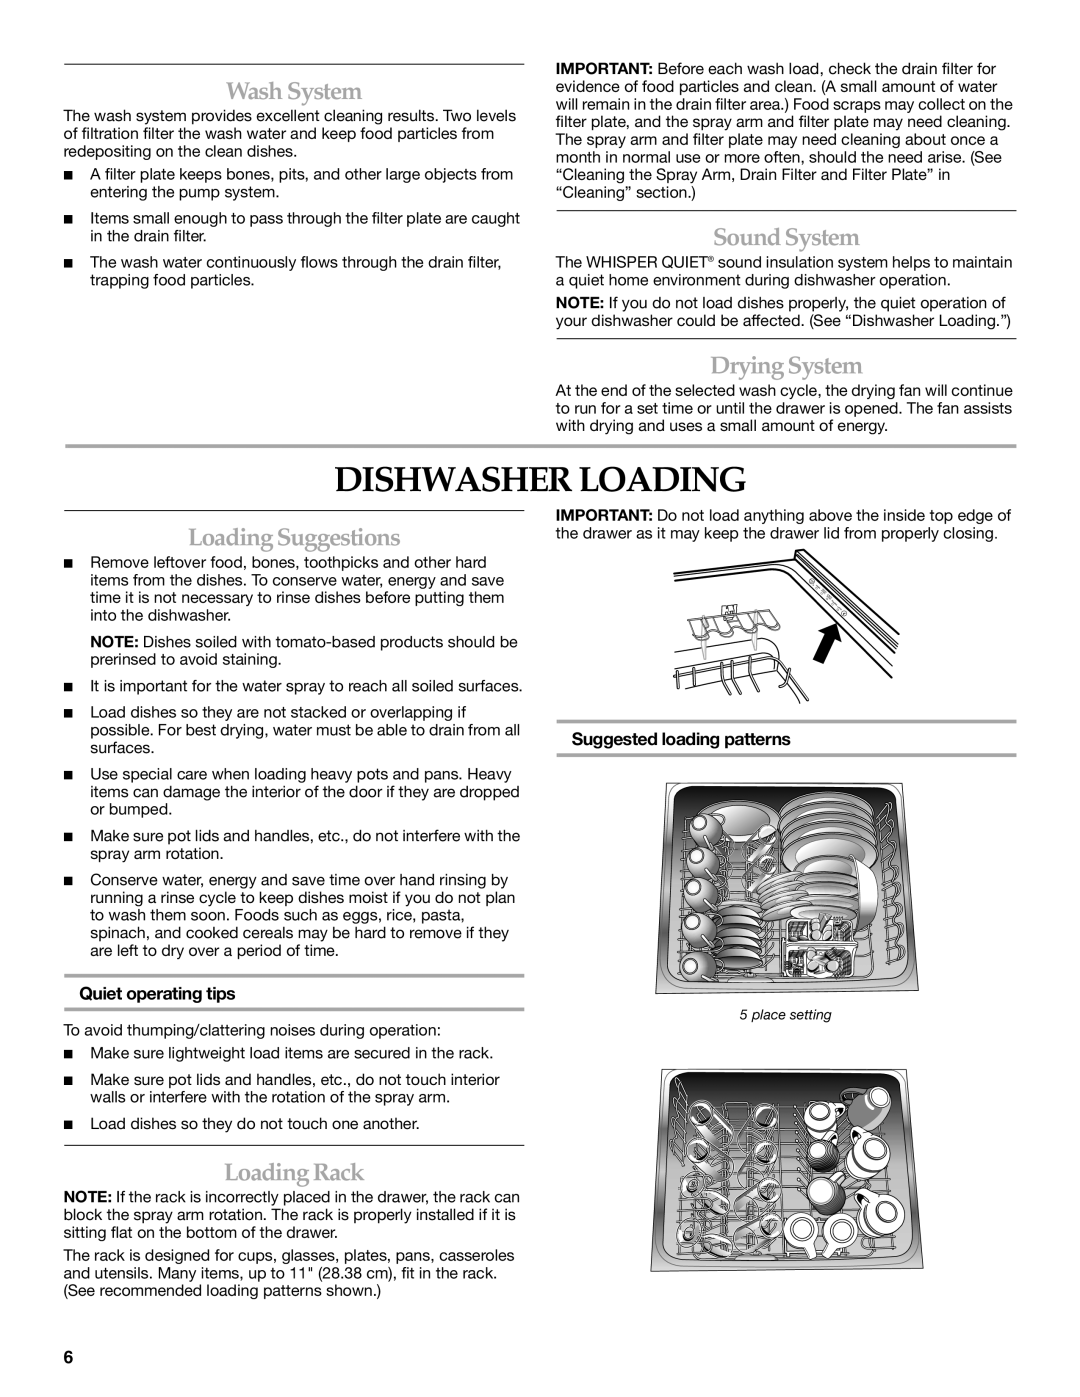 KitchenAid KUDD01DPPA manual Dishwasher Loading, Wash System, Sound System, Drying System, Loading Suggestions, LoadingRack 